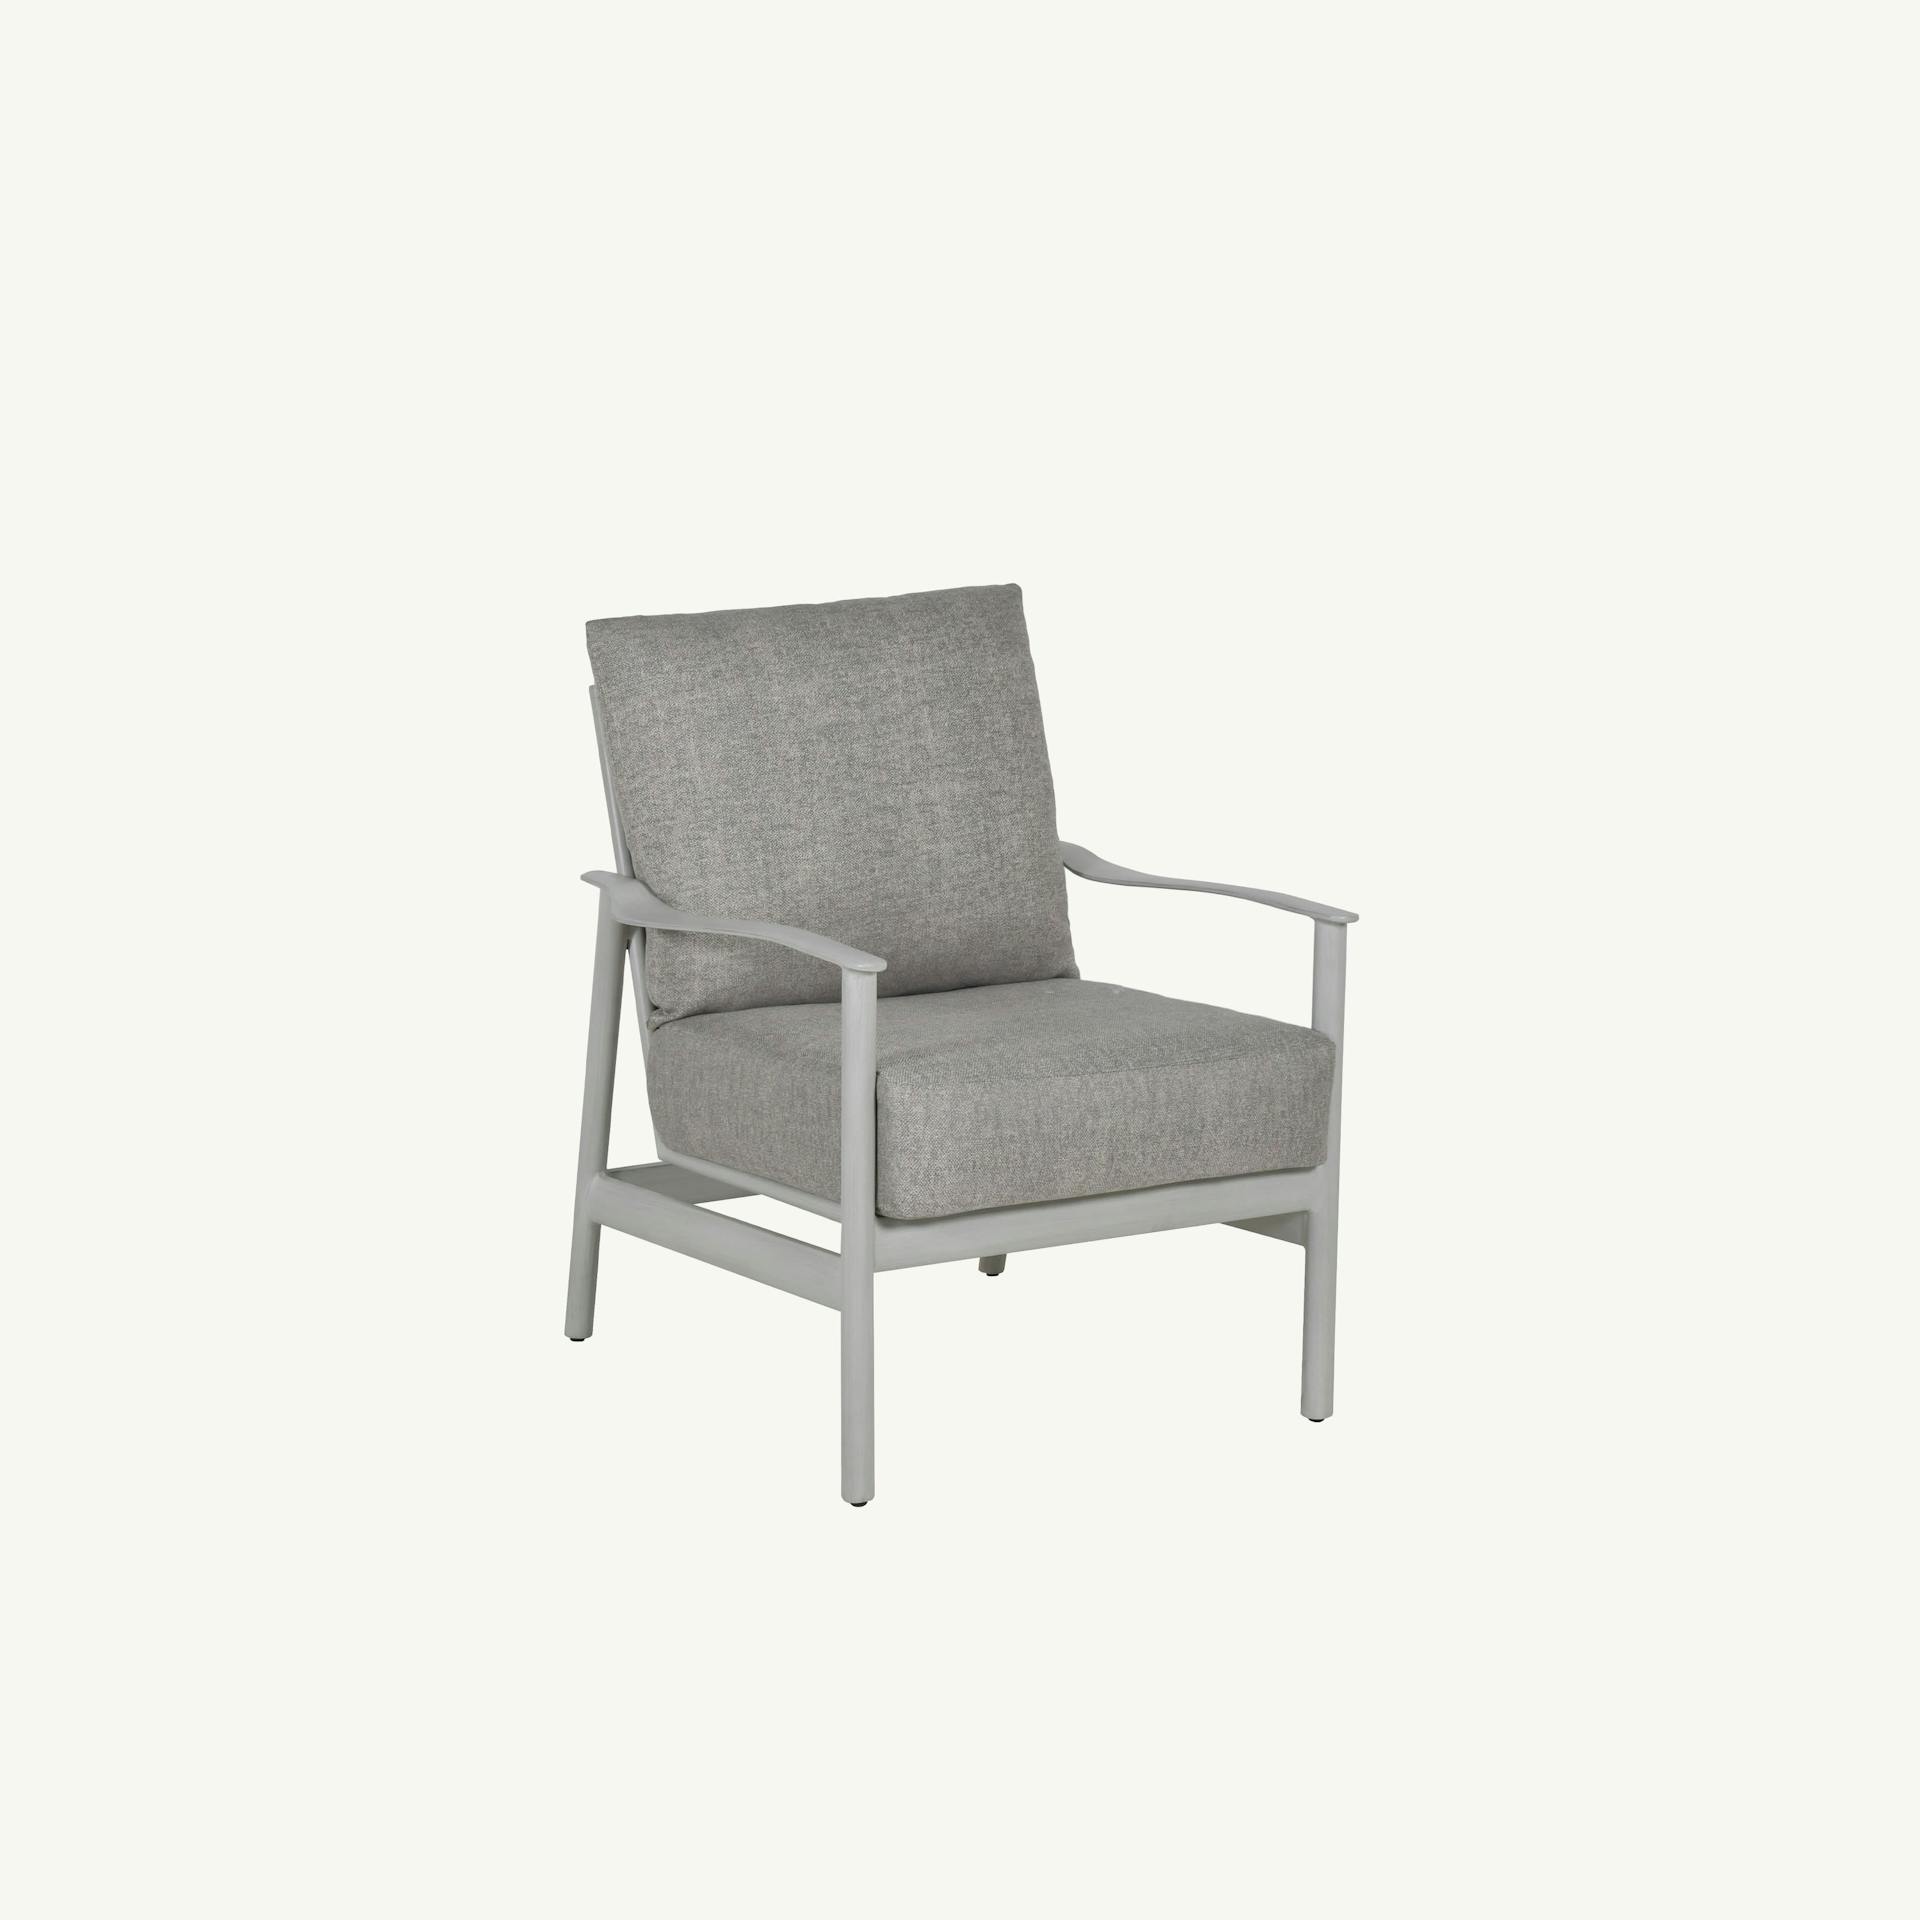 Barbados Cushion Lounge Chair